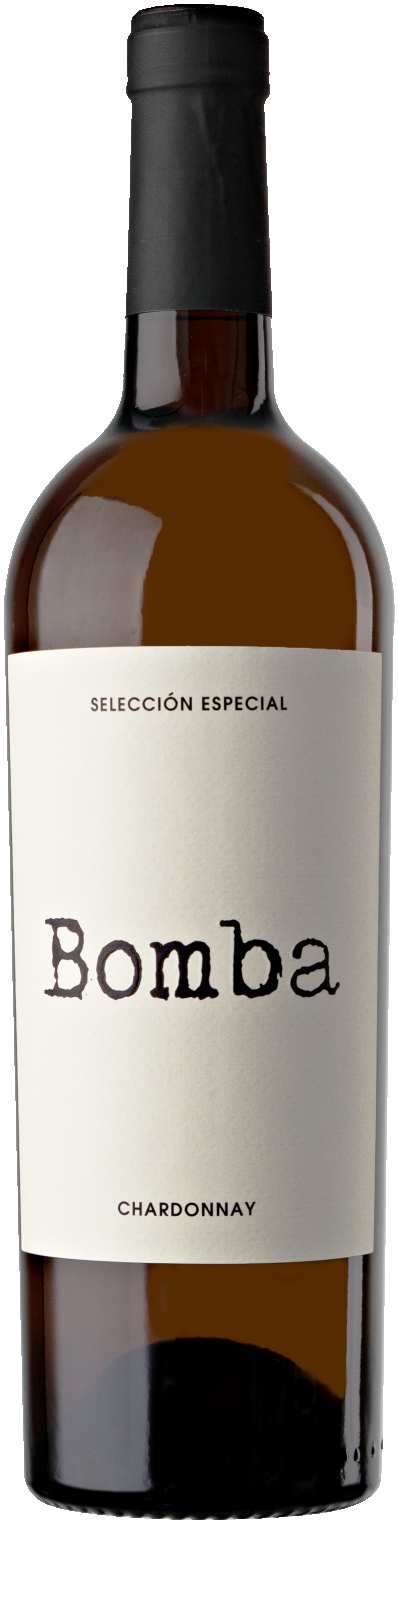 Bodegas Alceno Bomba Chardonnay Seleccion Especial Jumilla Spain